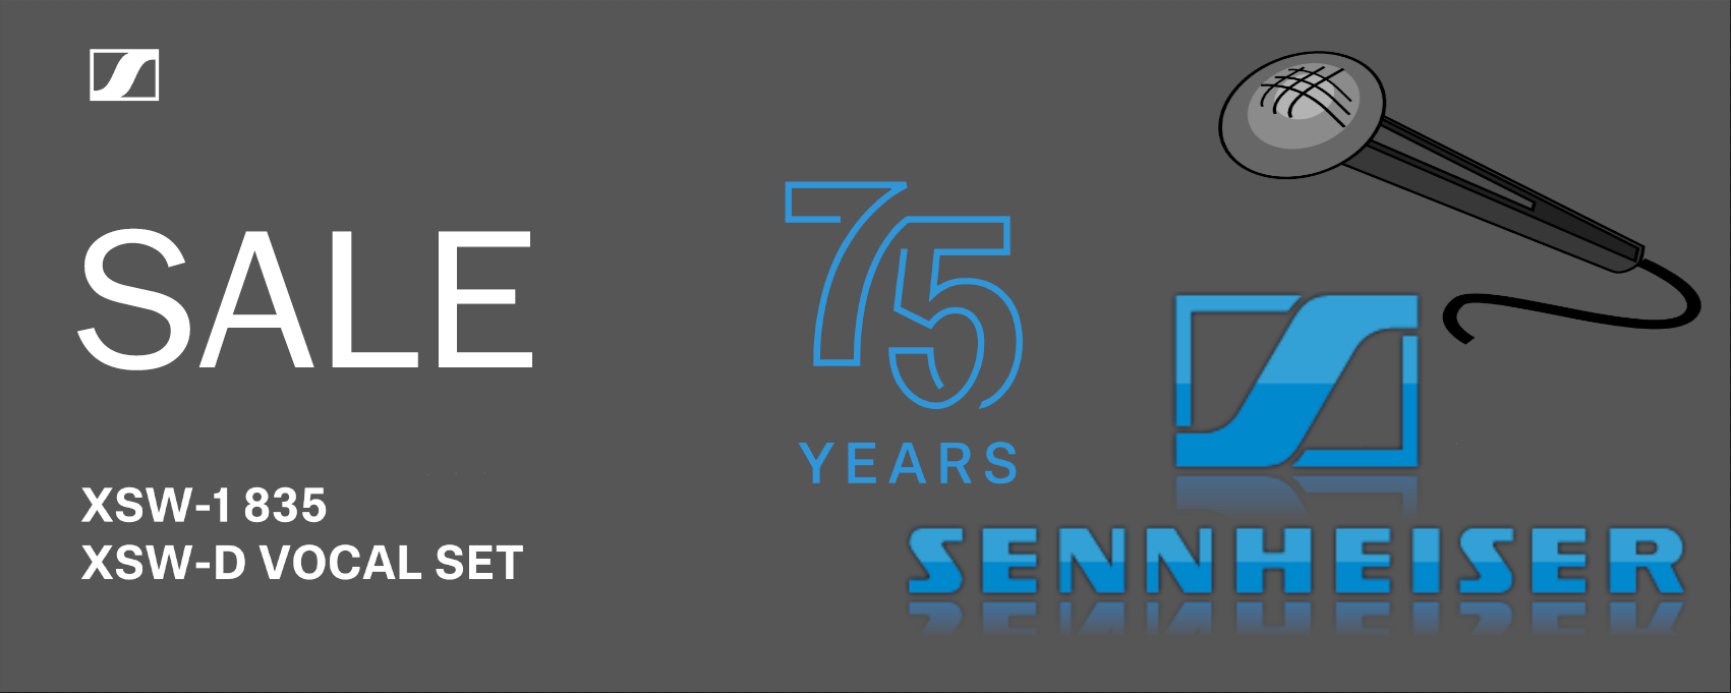 Sennheiser 75 years